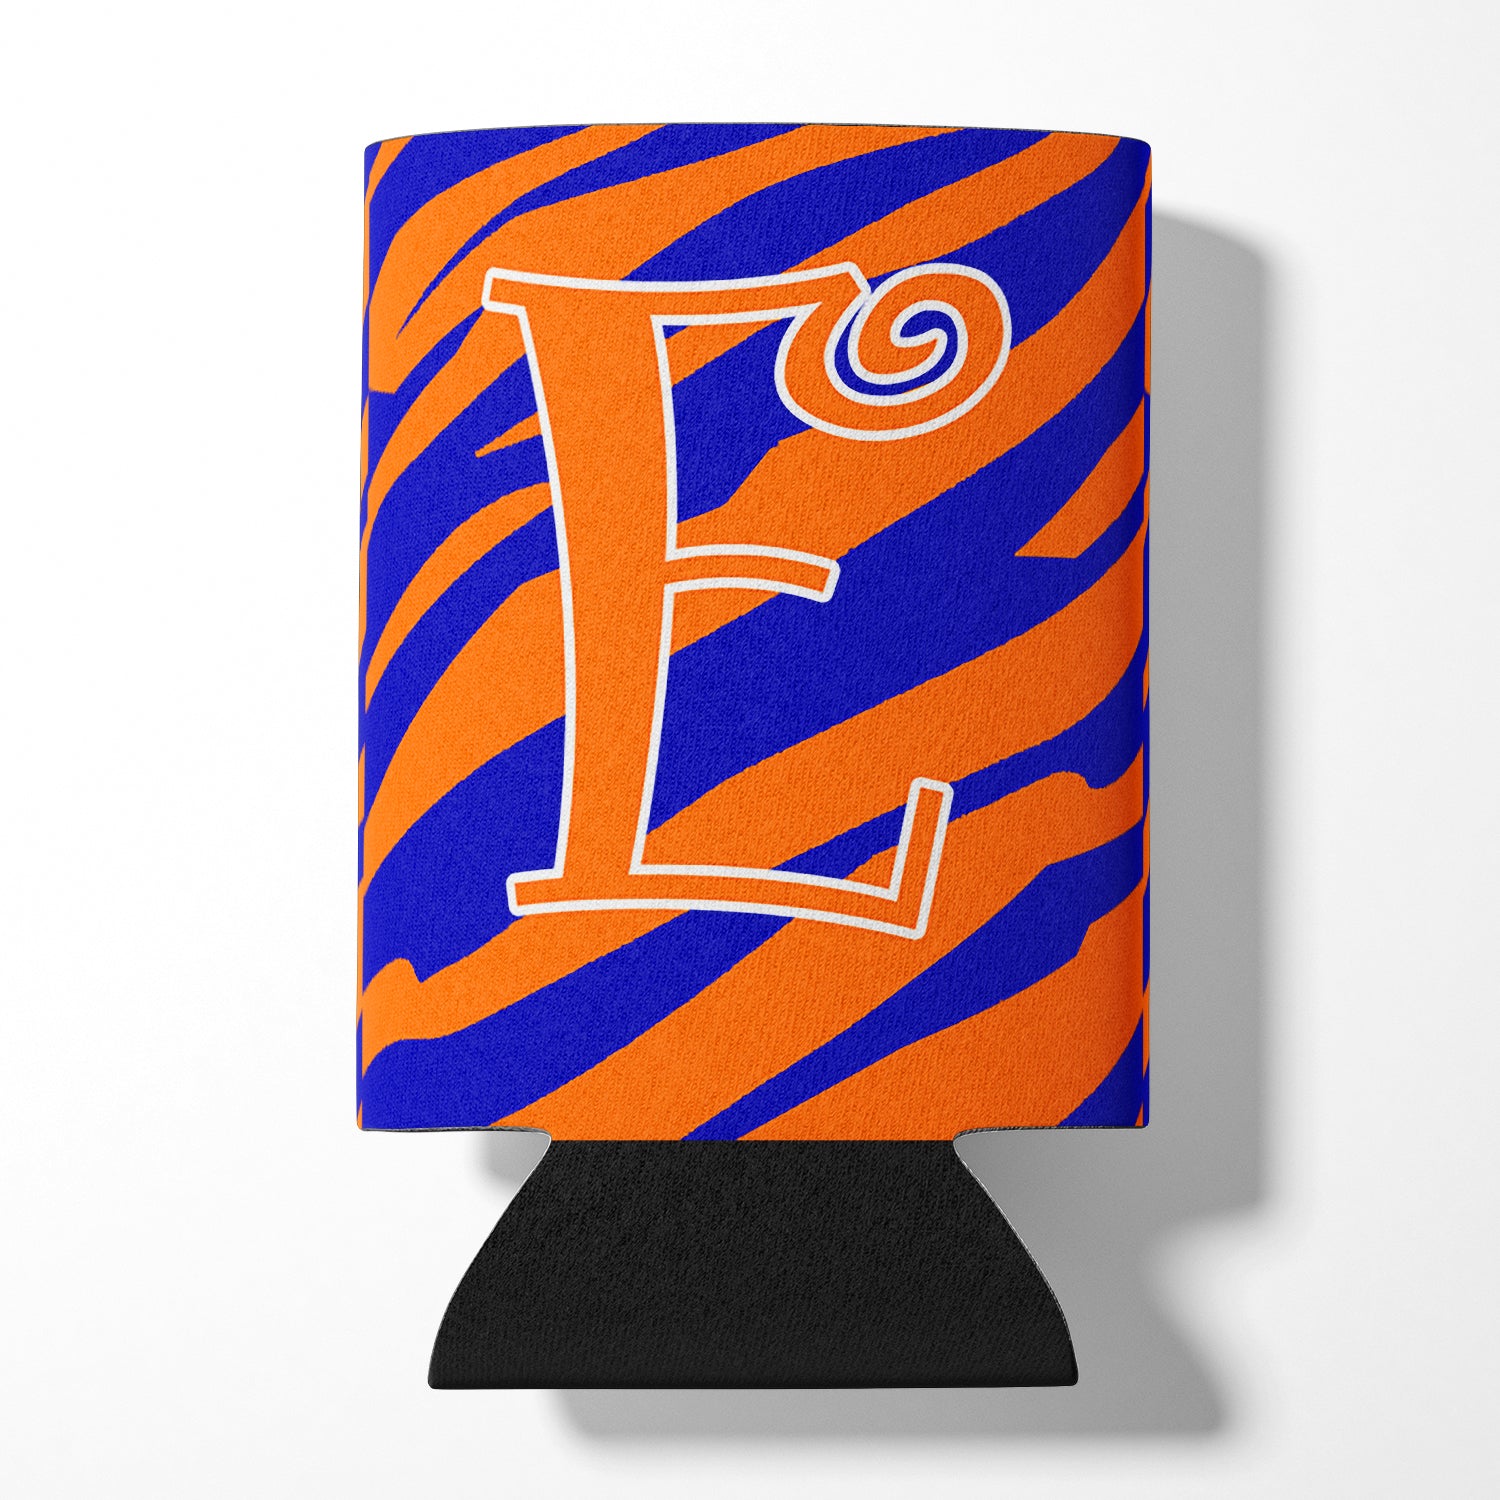 Monogramme initial de la lettre E - Tiger Stripe Blue and Orange Can Beverage Insulator Hugger